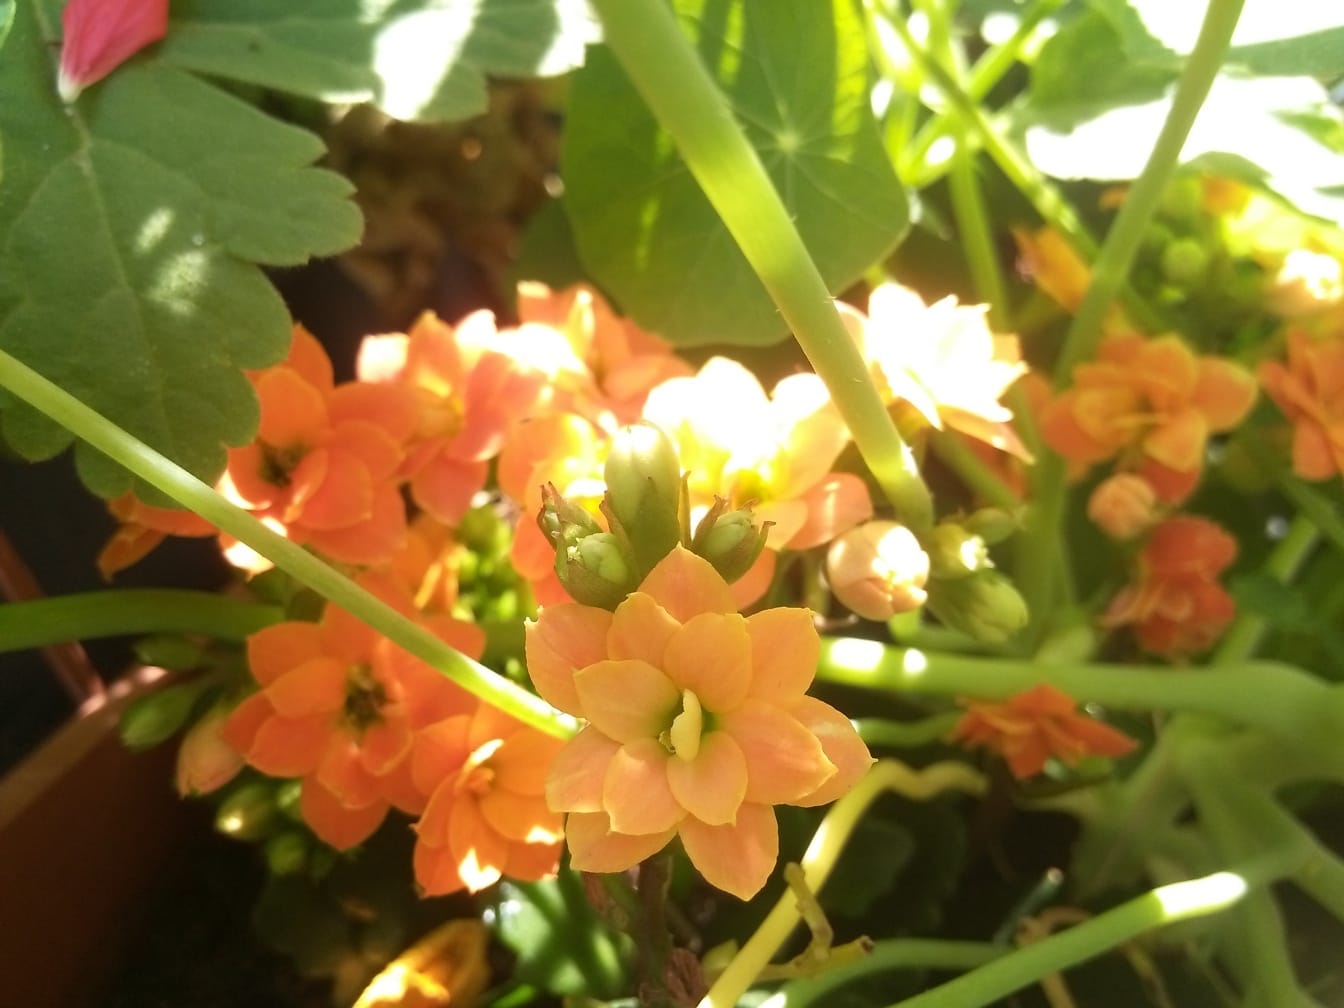 Oranjegele bloemen van Flaming Katy (Kalanchoe blossfeldiana)